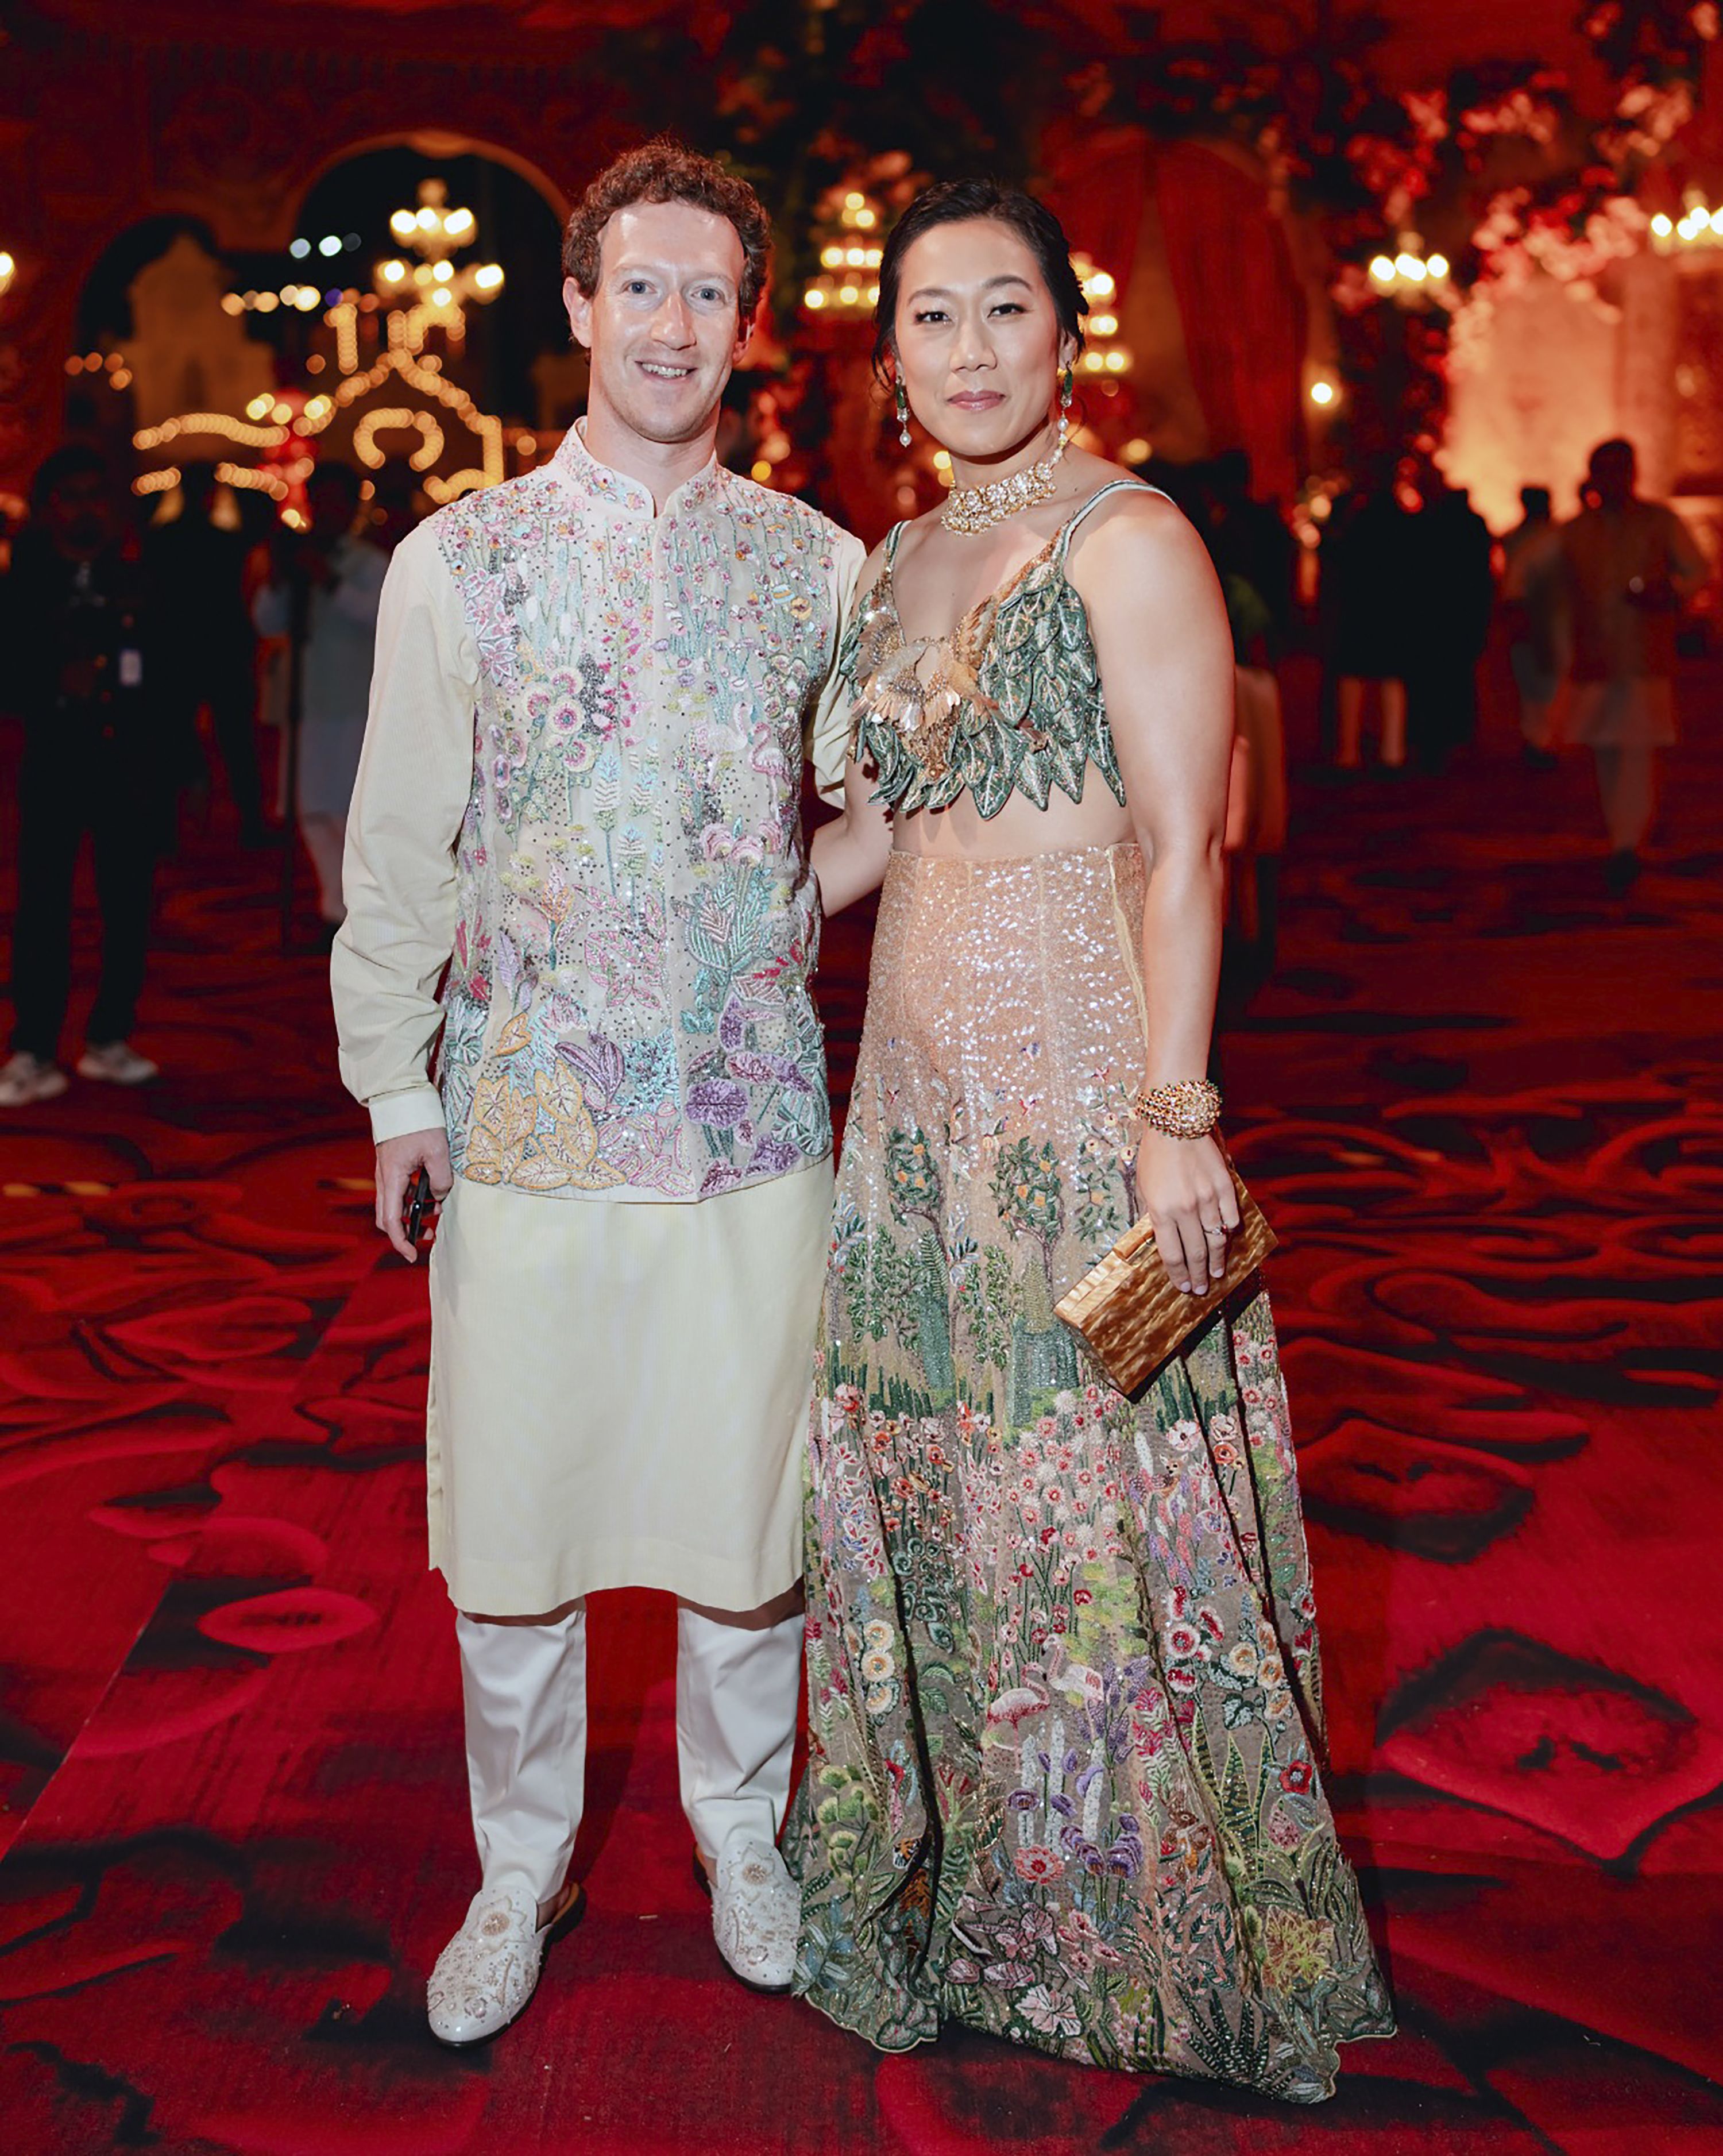 Celebrity Wedding Destinations: Indian hotels that've hosted